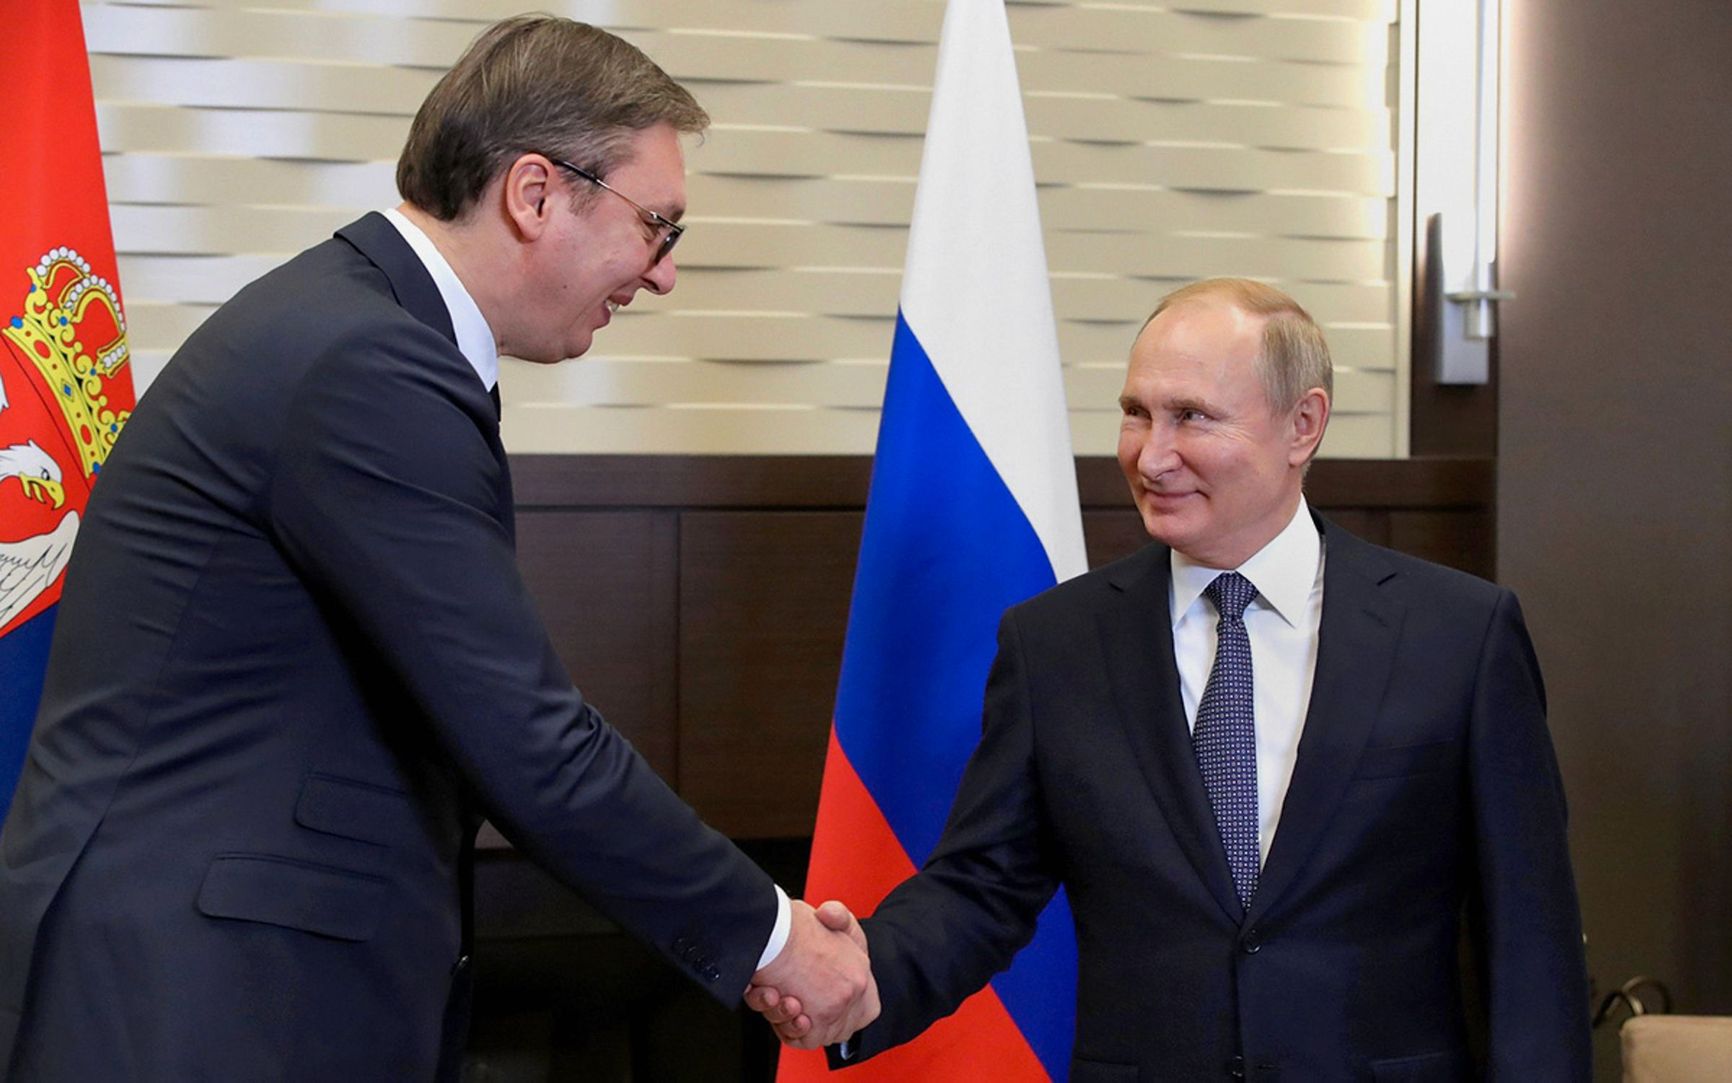  Milorad Dodik and Vladimir Putin